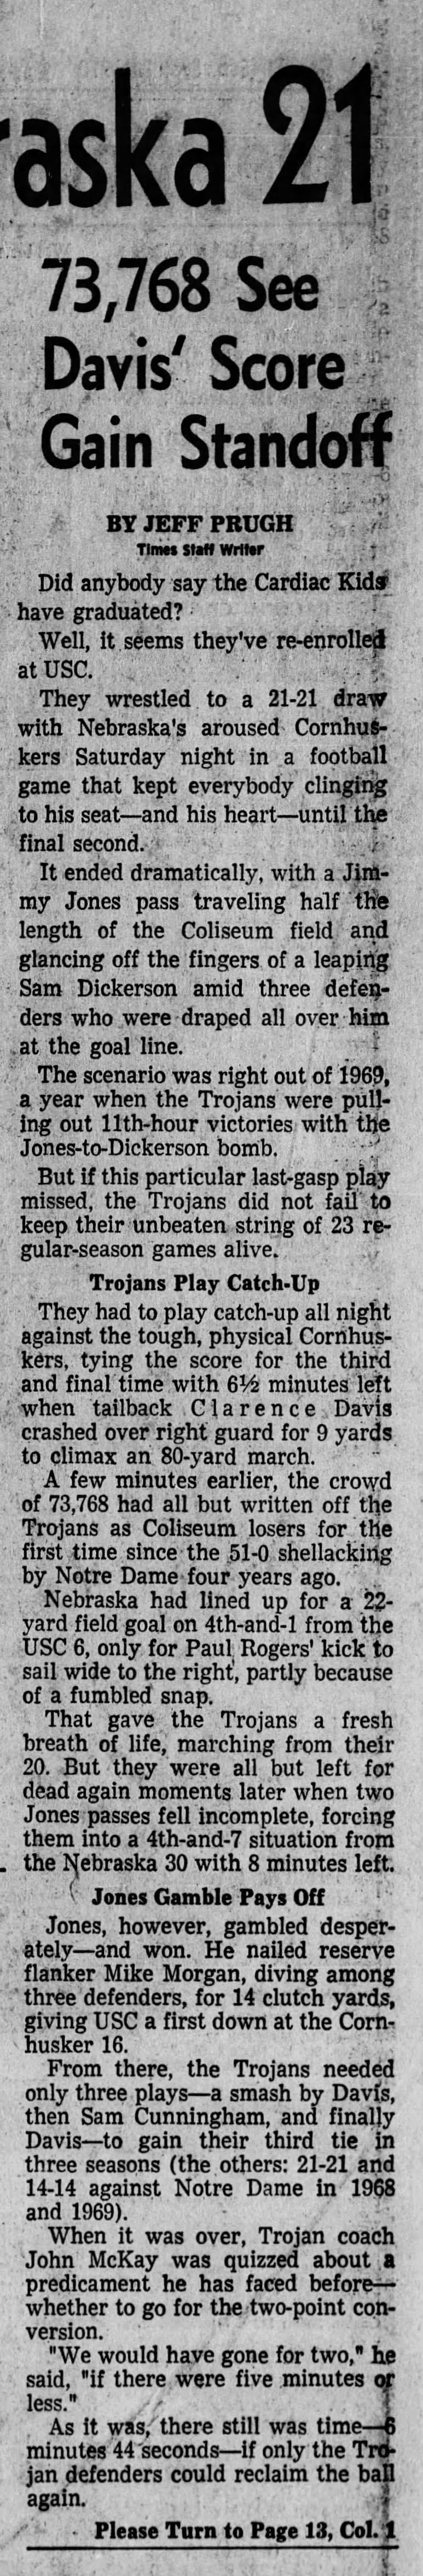 1970 Nebraska-USC football, LAT1